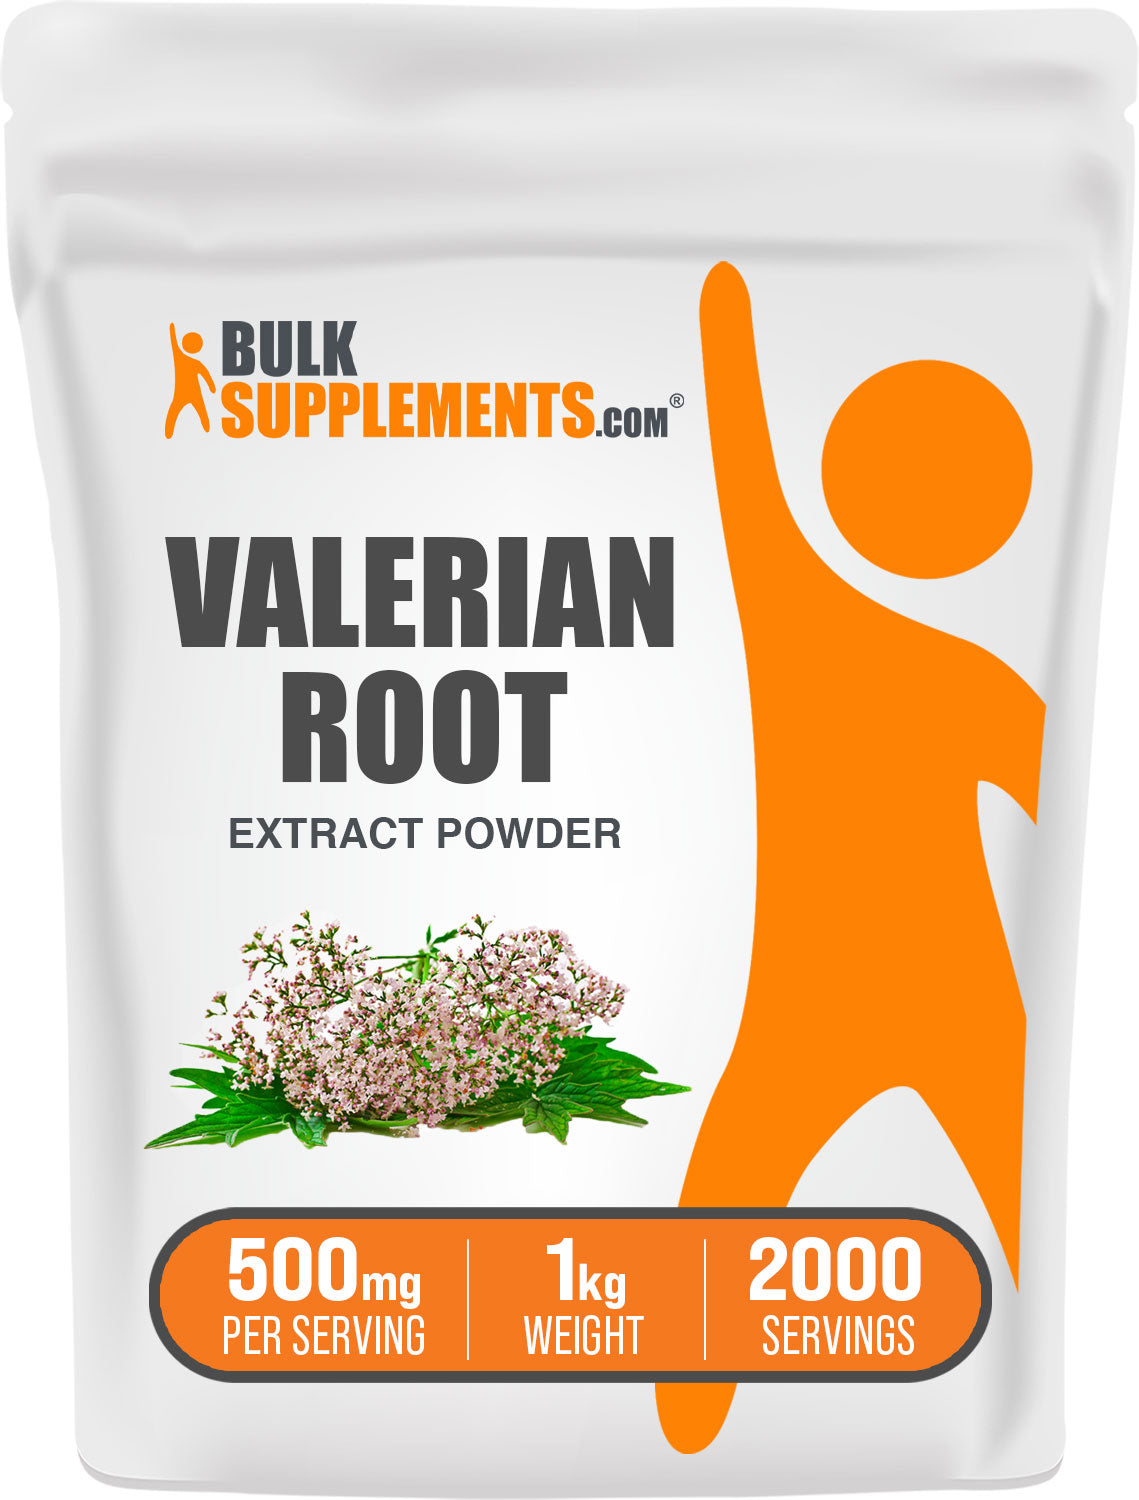 BulkSupplements Valerian Root Extract Powder 1kg bag